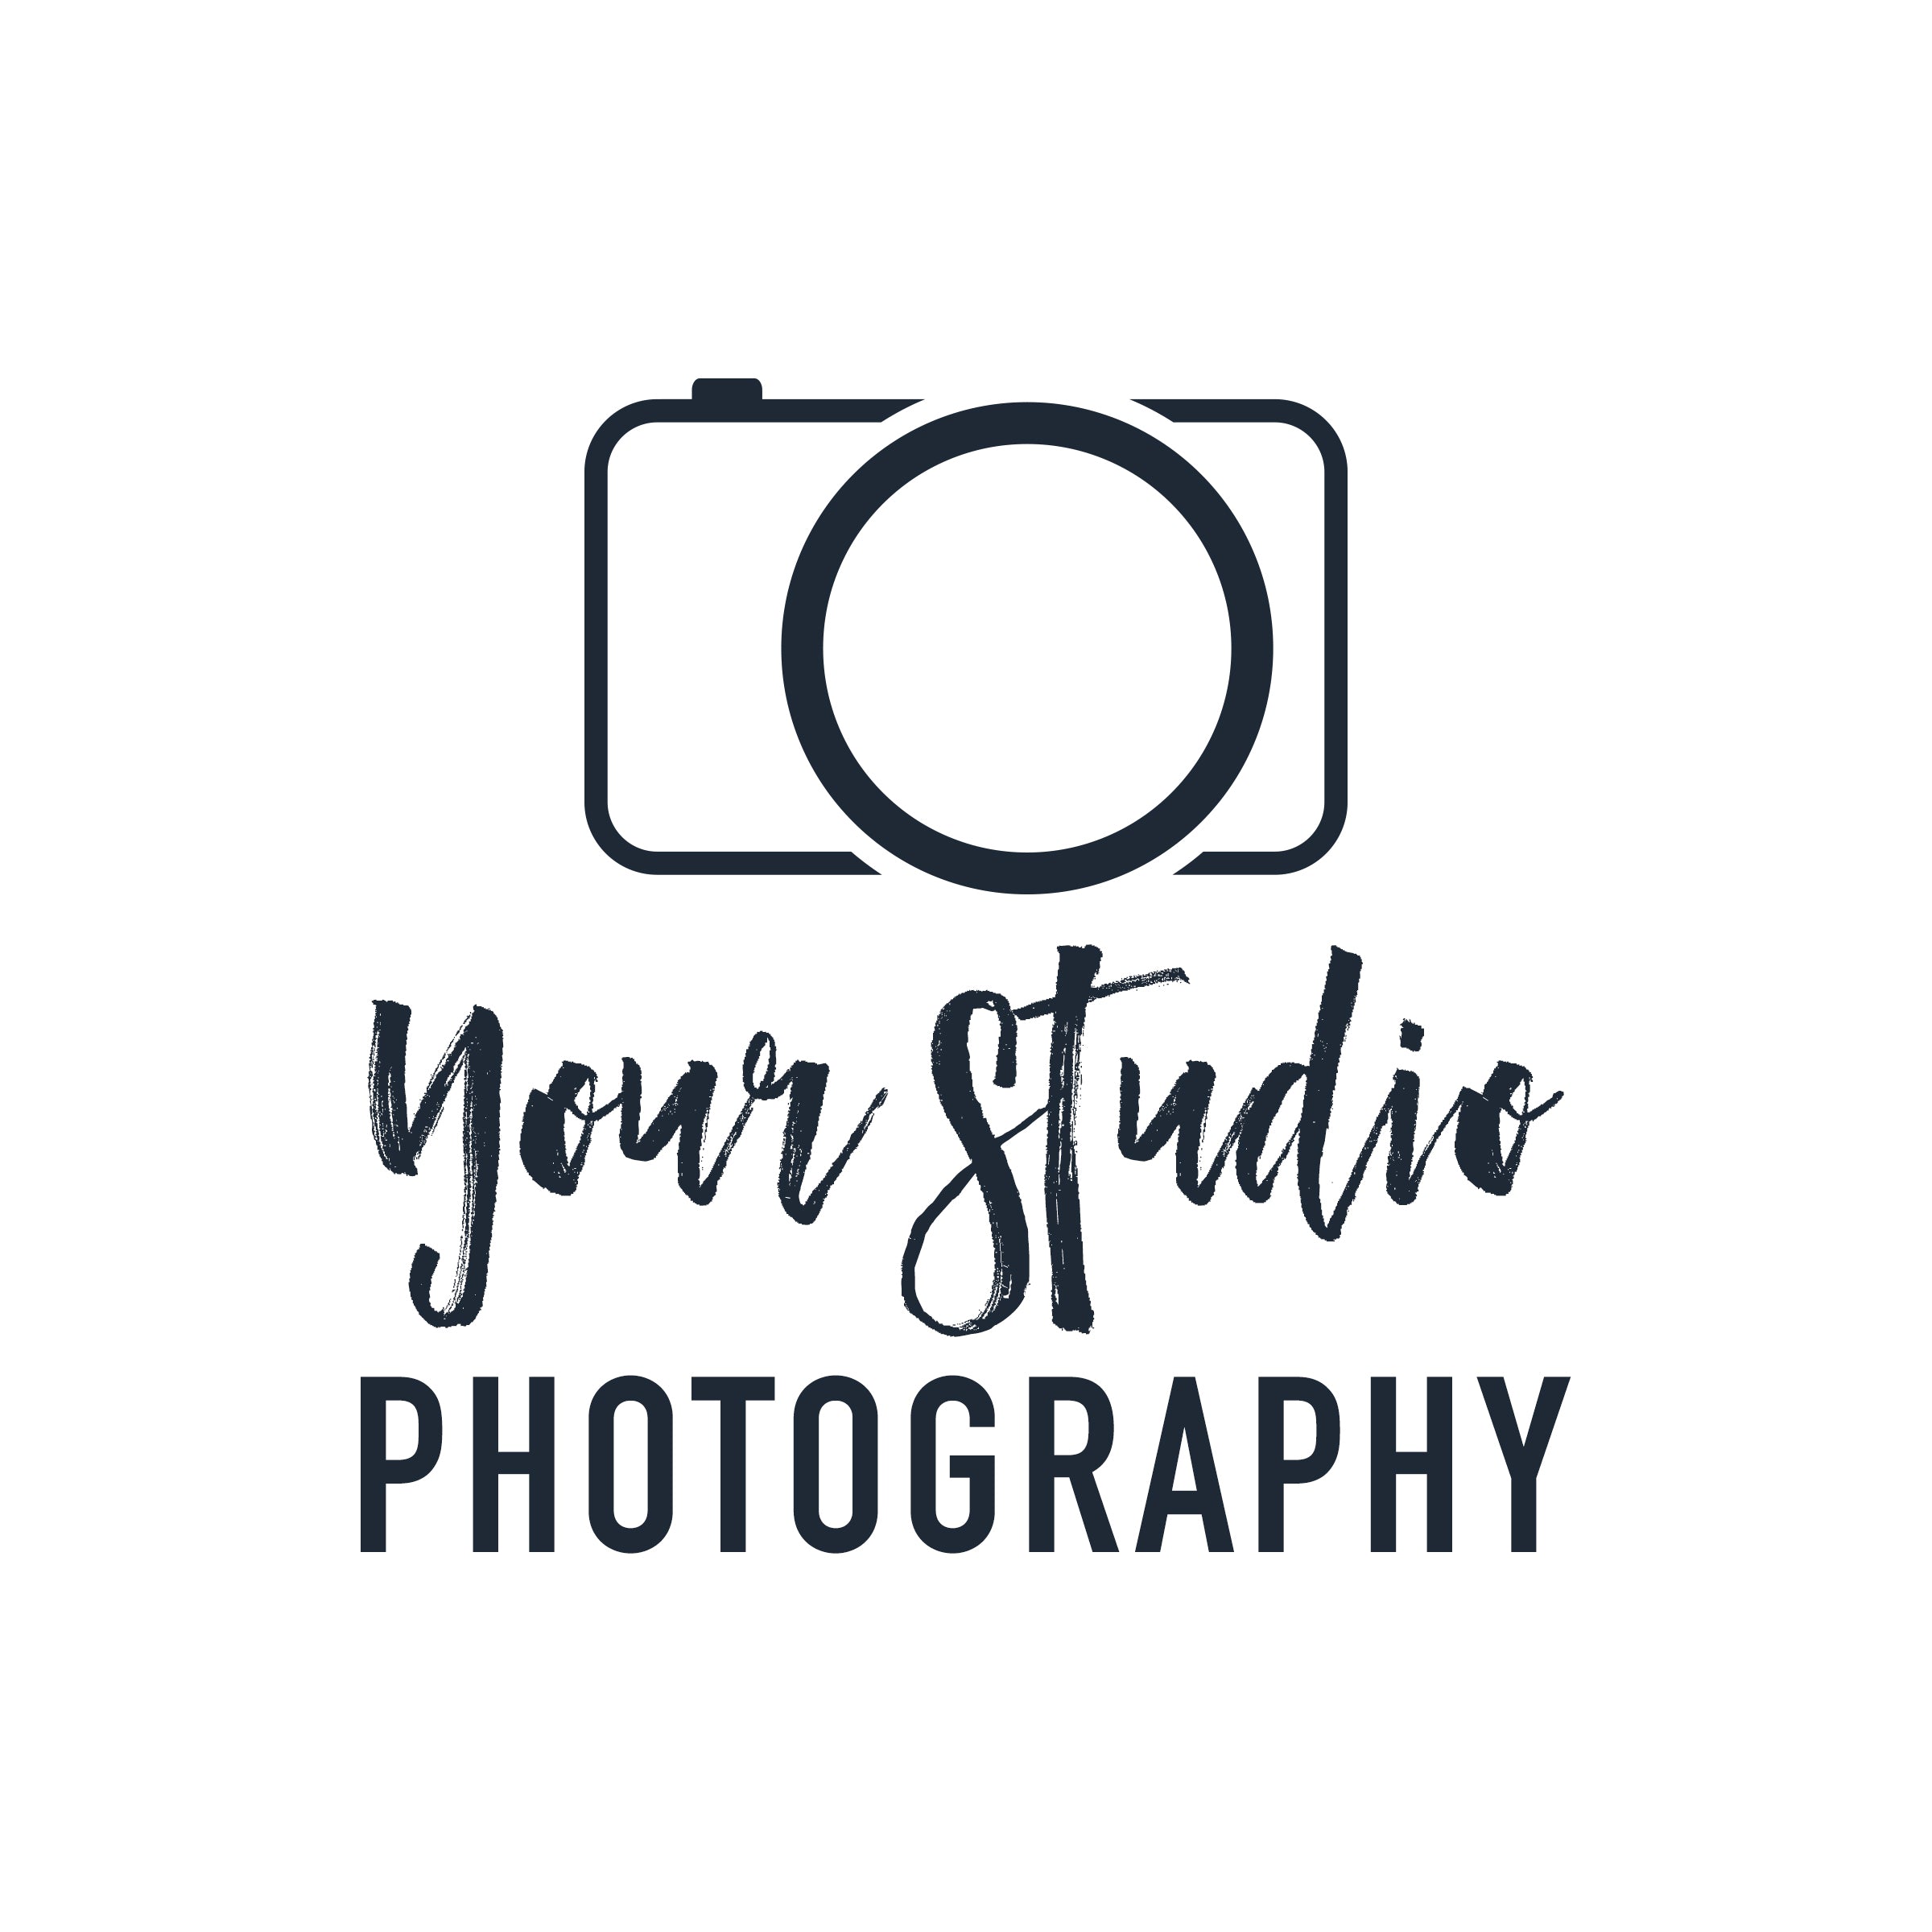 *BRAND NEW* 25 Unique Camera Logos for Photographers - BP4U Guides